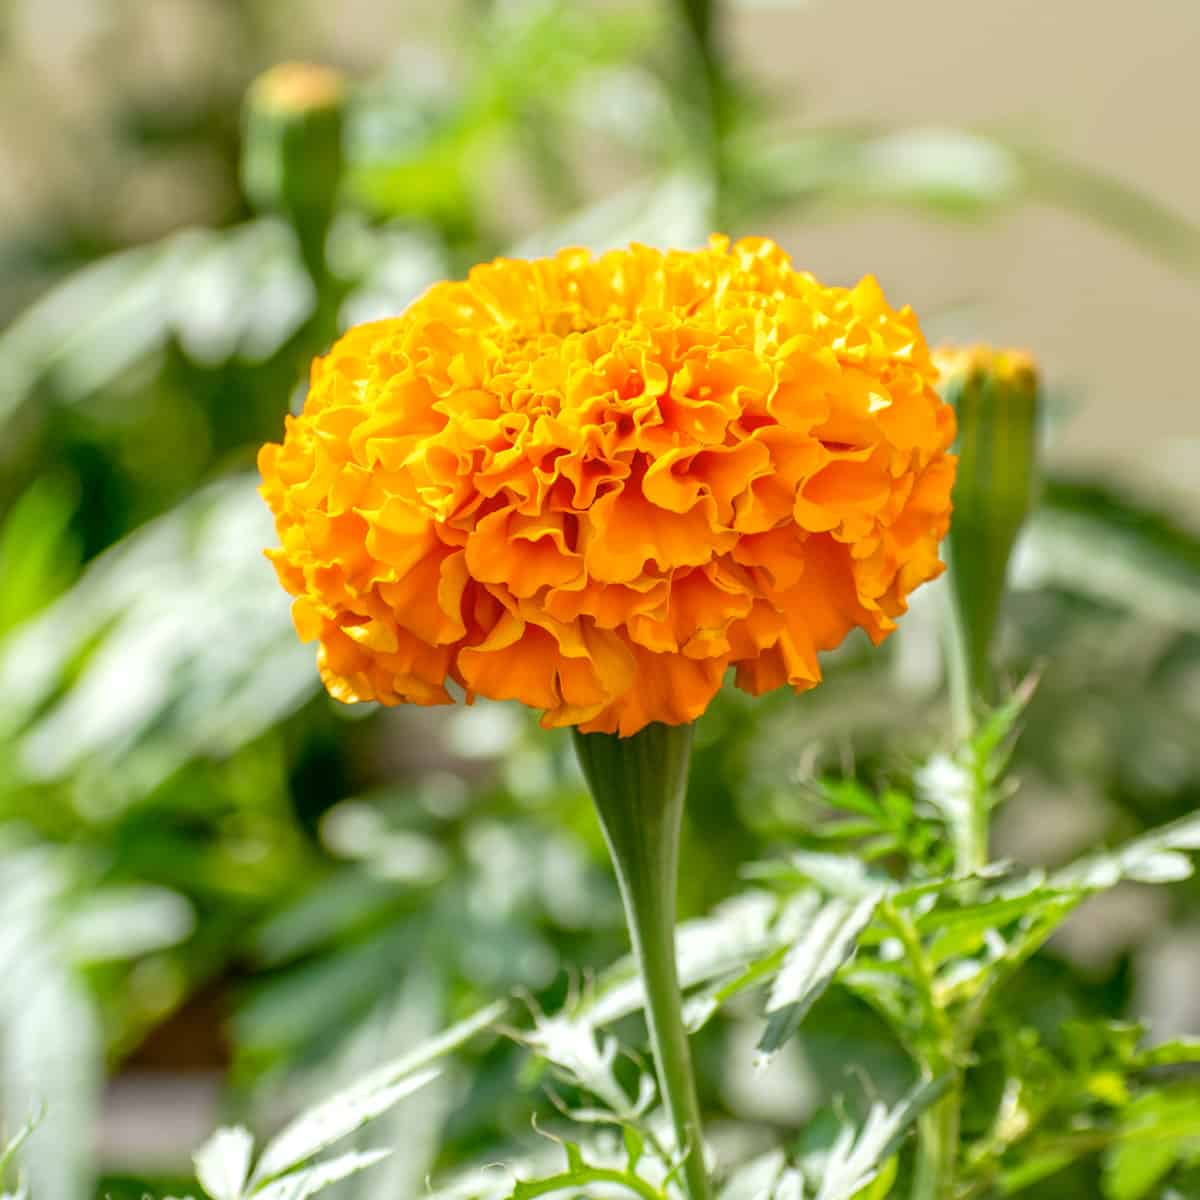 Image of Marigolds companion plant for nightshades